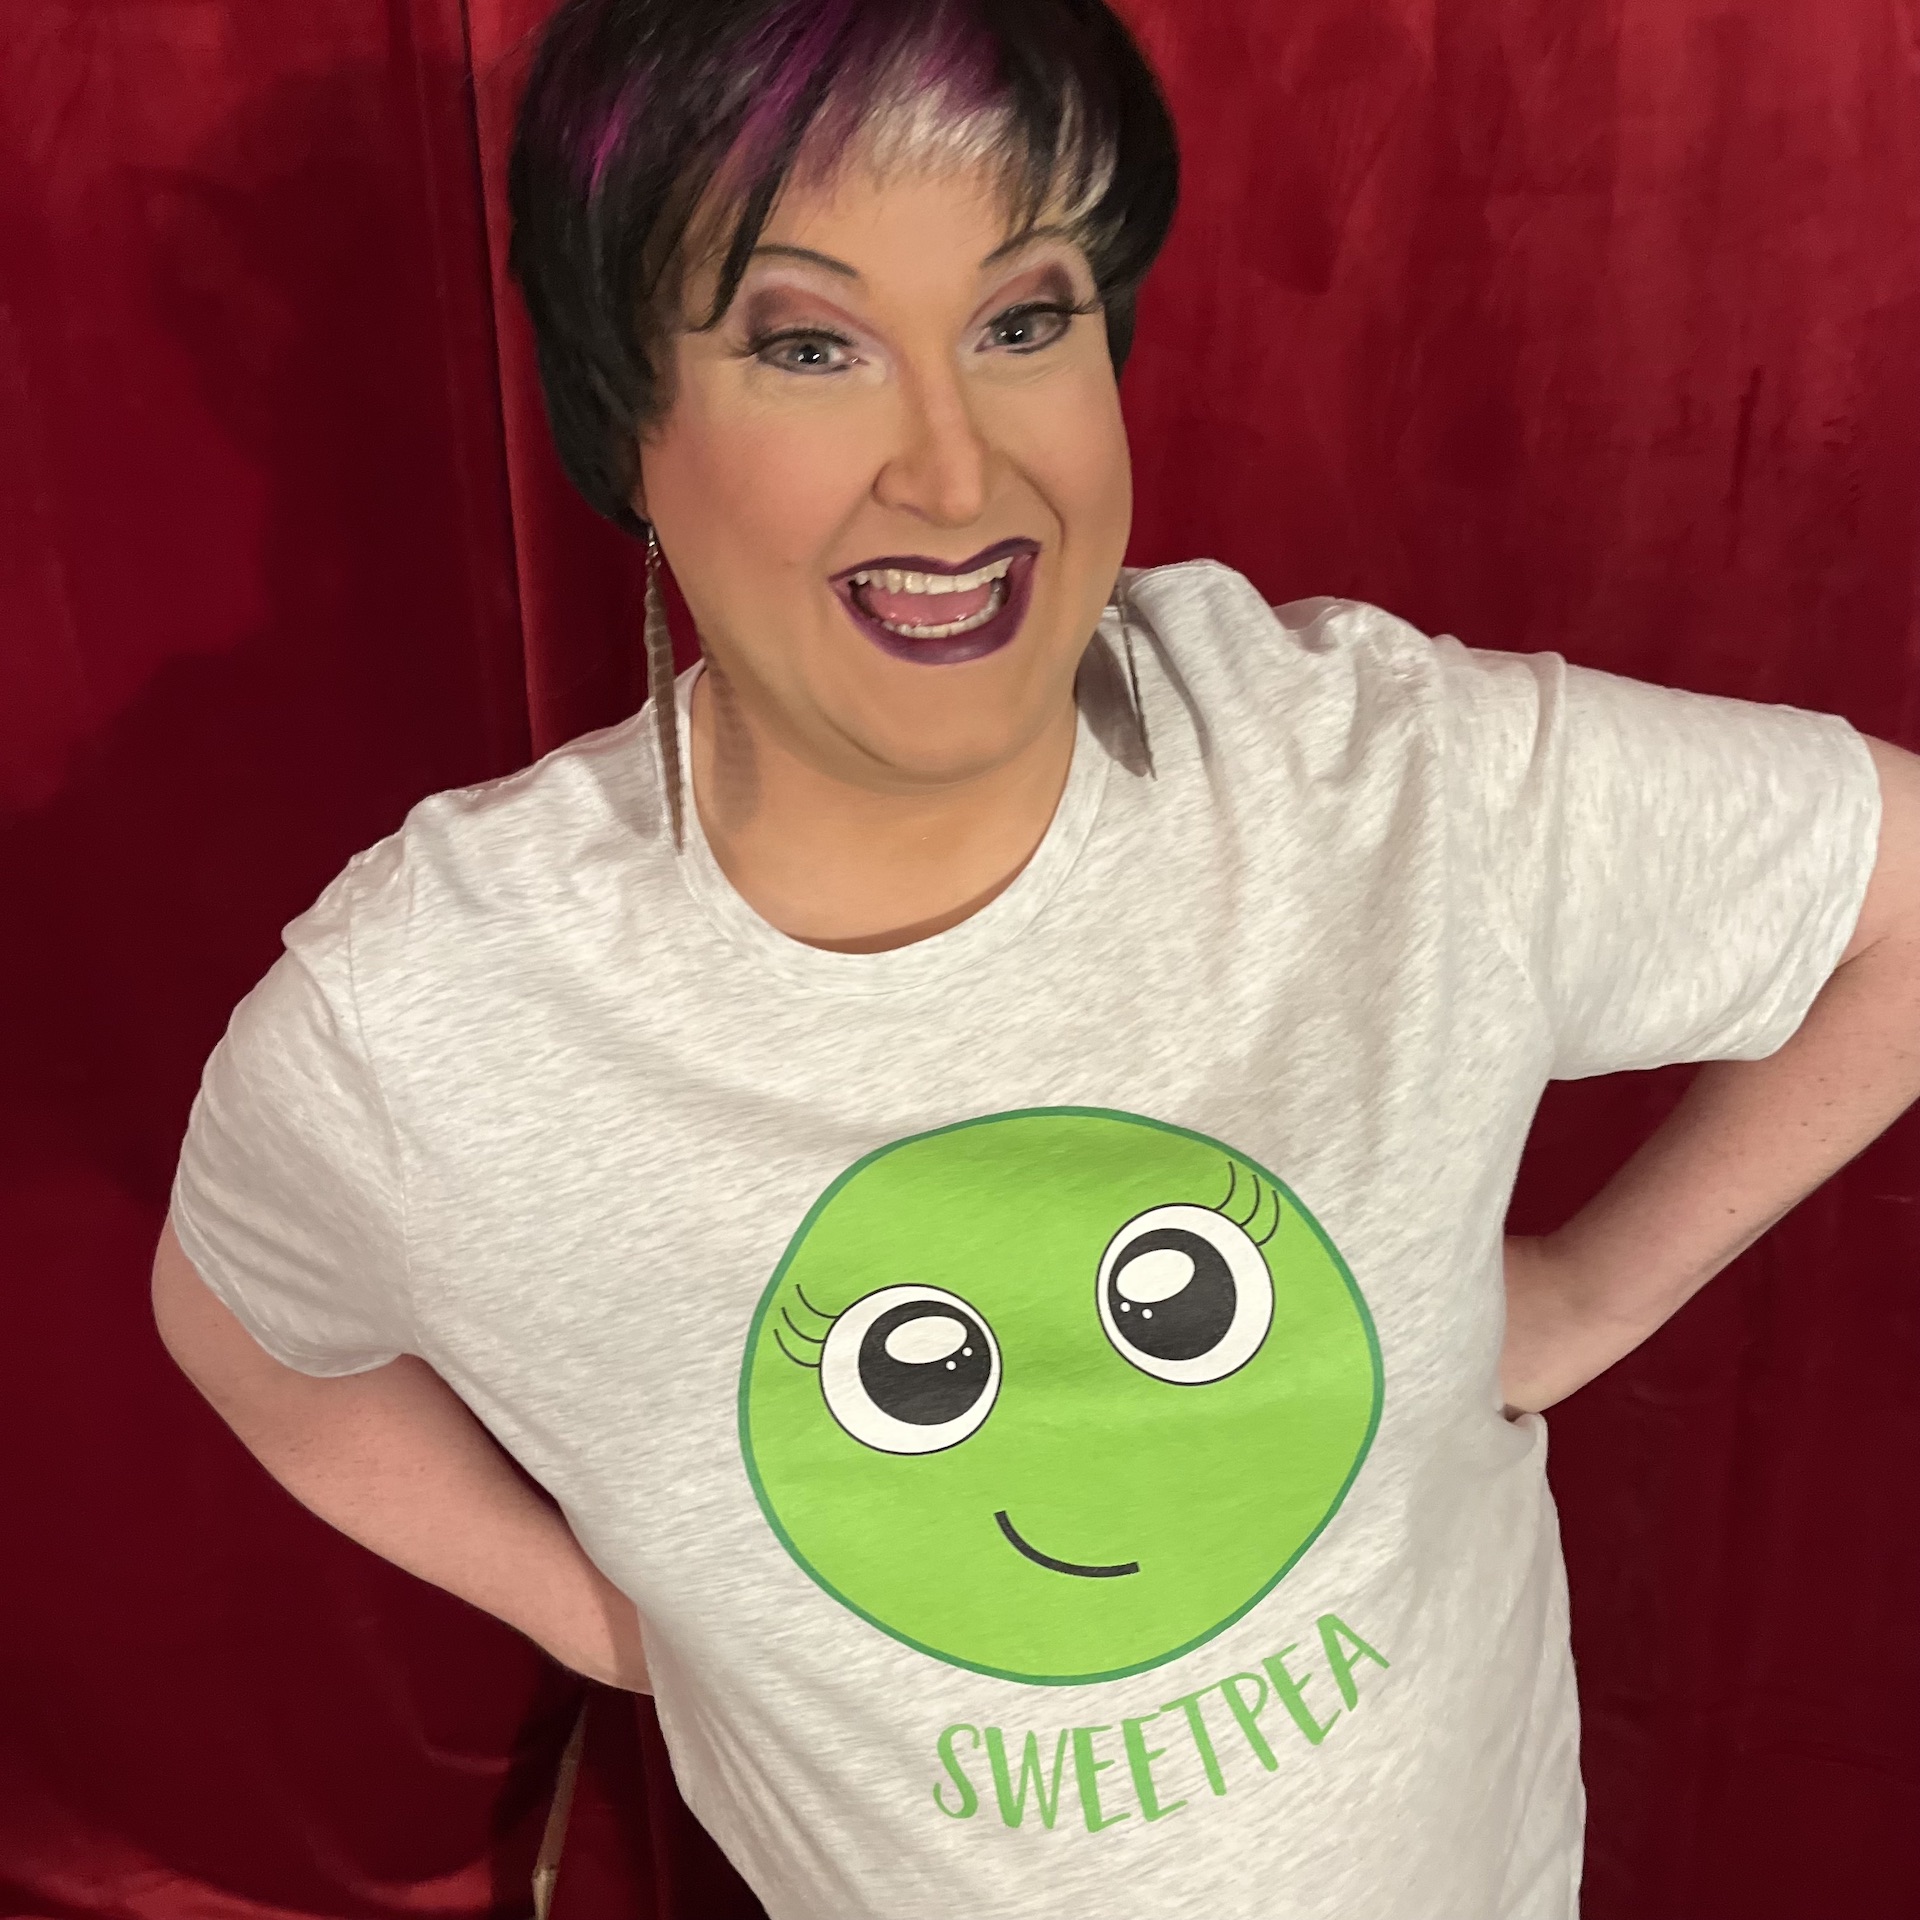 Tyffanie in a SweetPea t-shirt